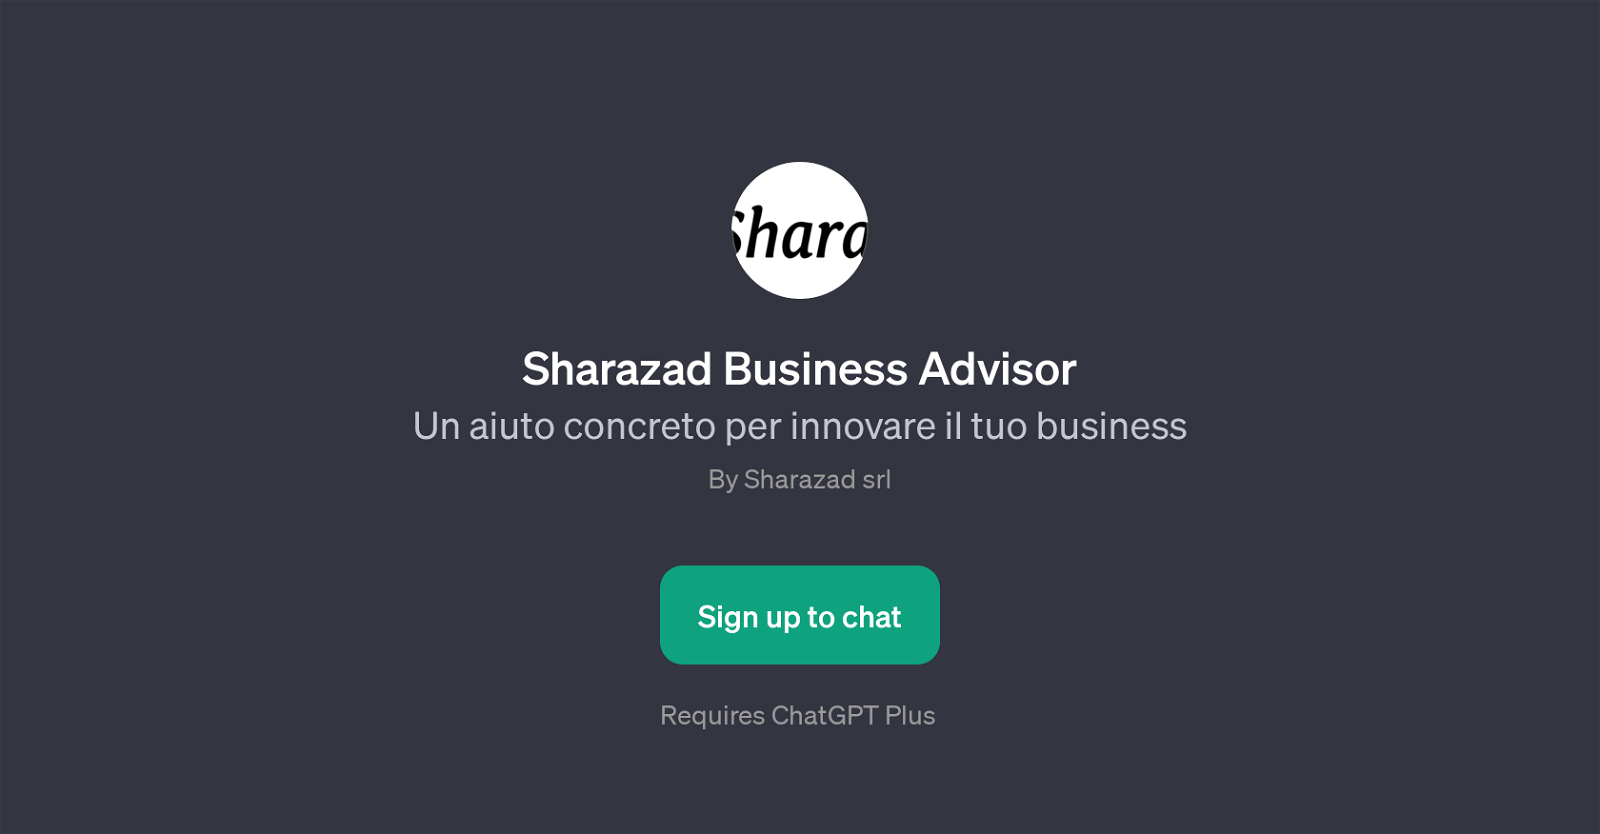 Sharazad Business Advisor website